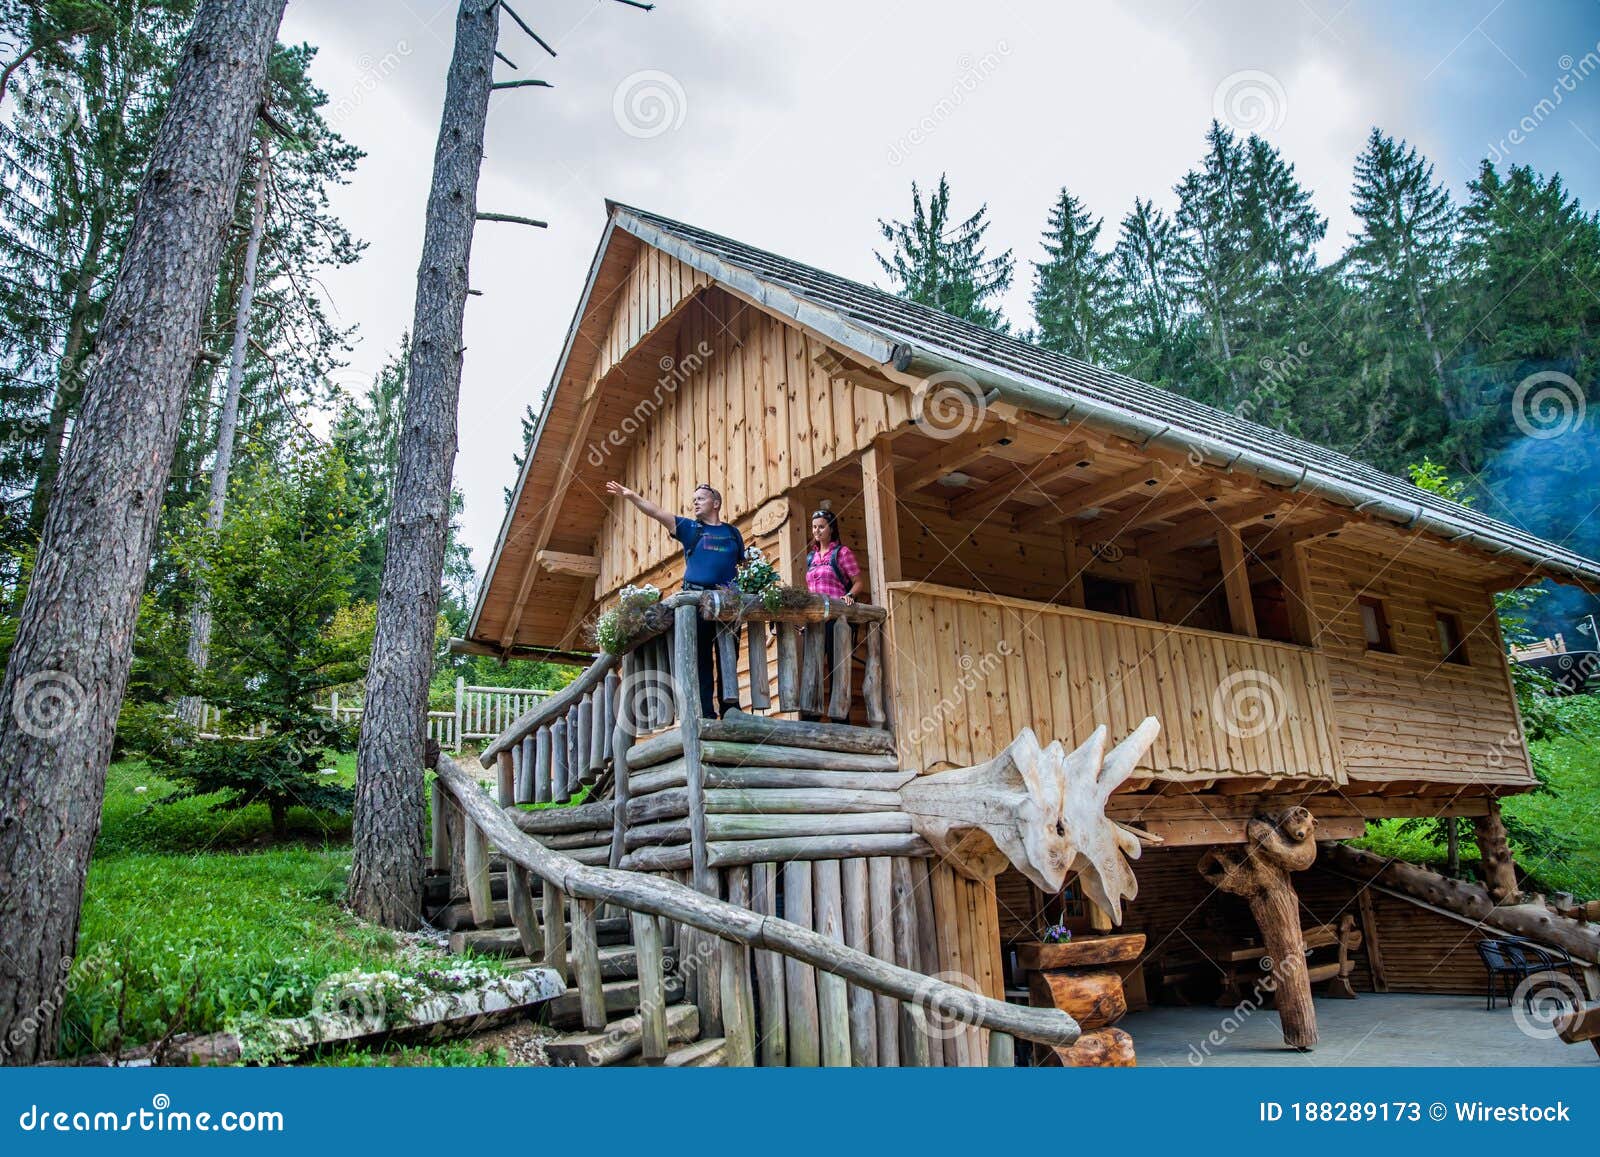 wooden cabin with tourists at hija glamping lake bloke in nova vas, slovenia